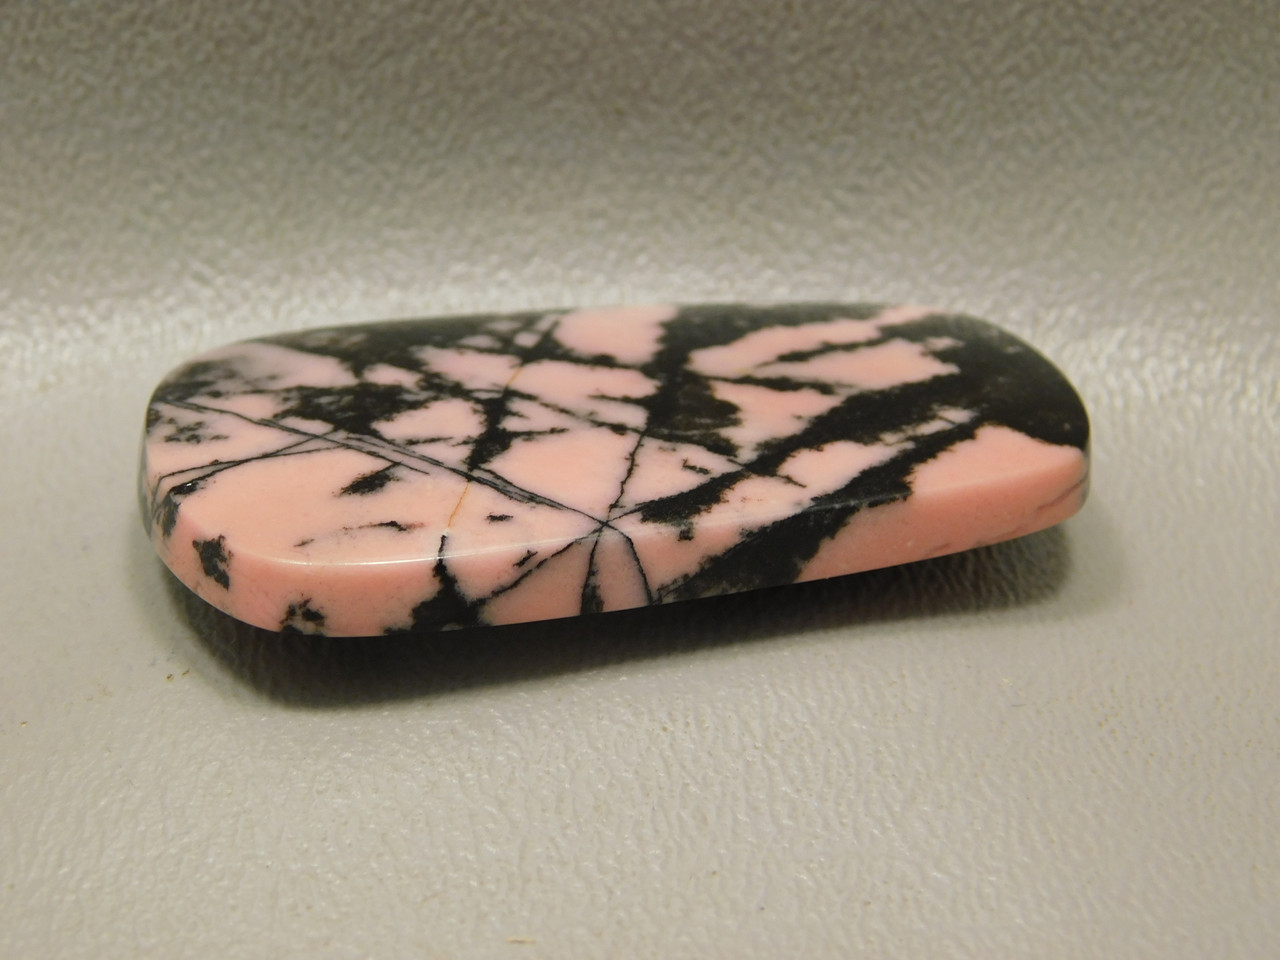 Cabochon Rhodonite Pink and Black Jewelry Stone Australia #17